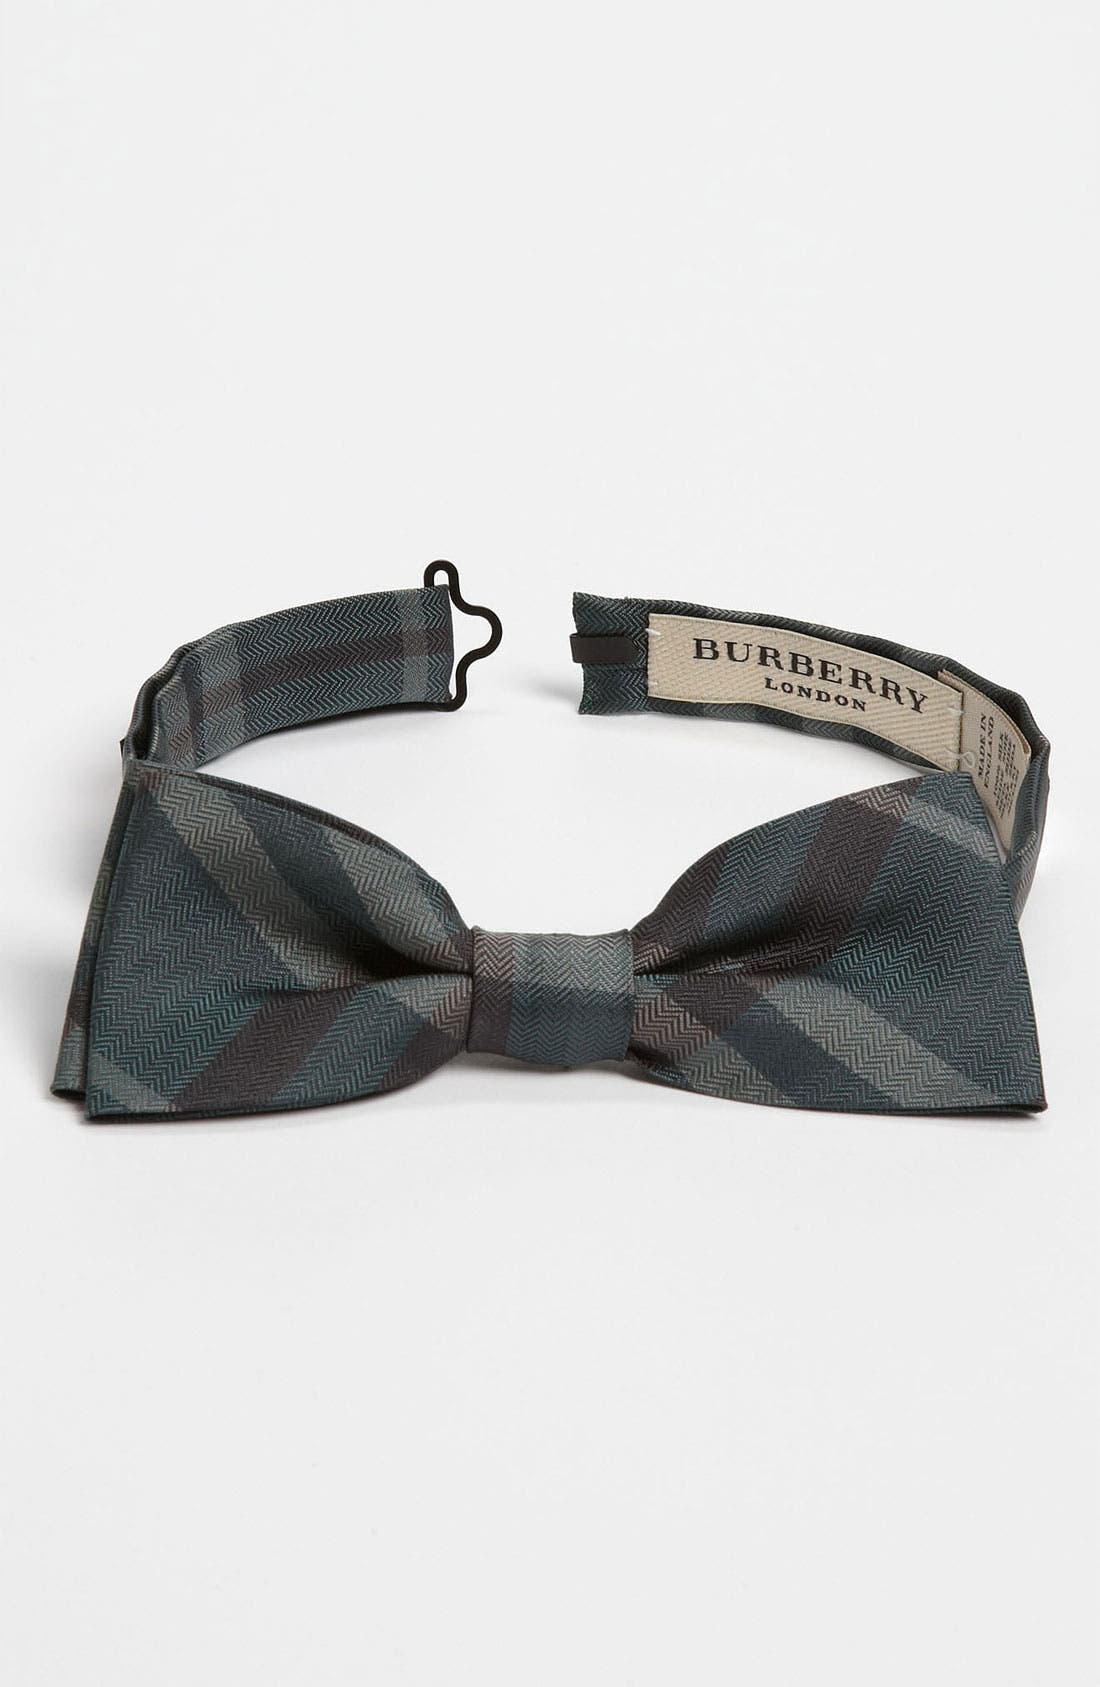 burberry bow tie sale